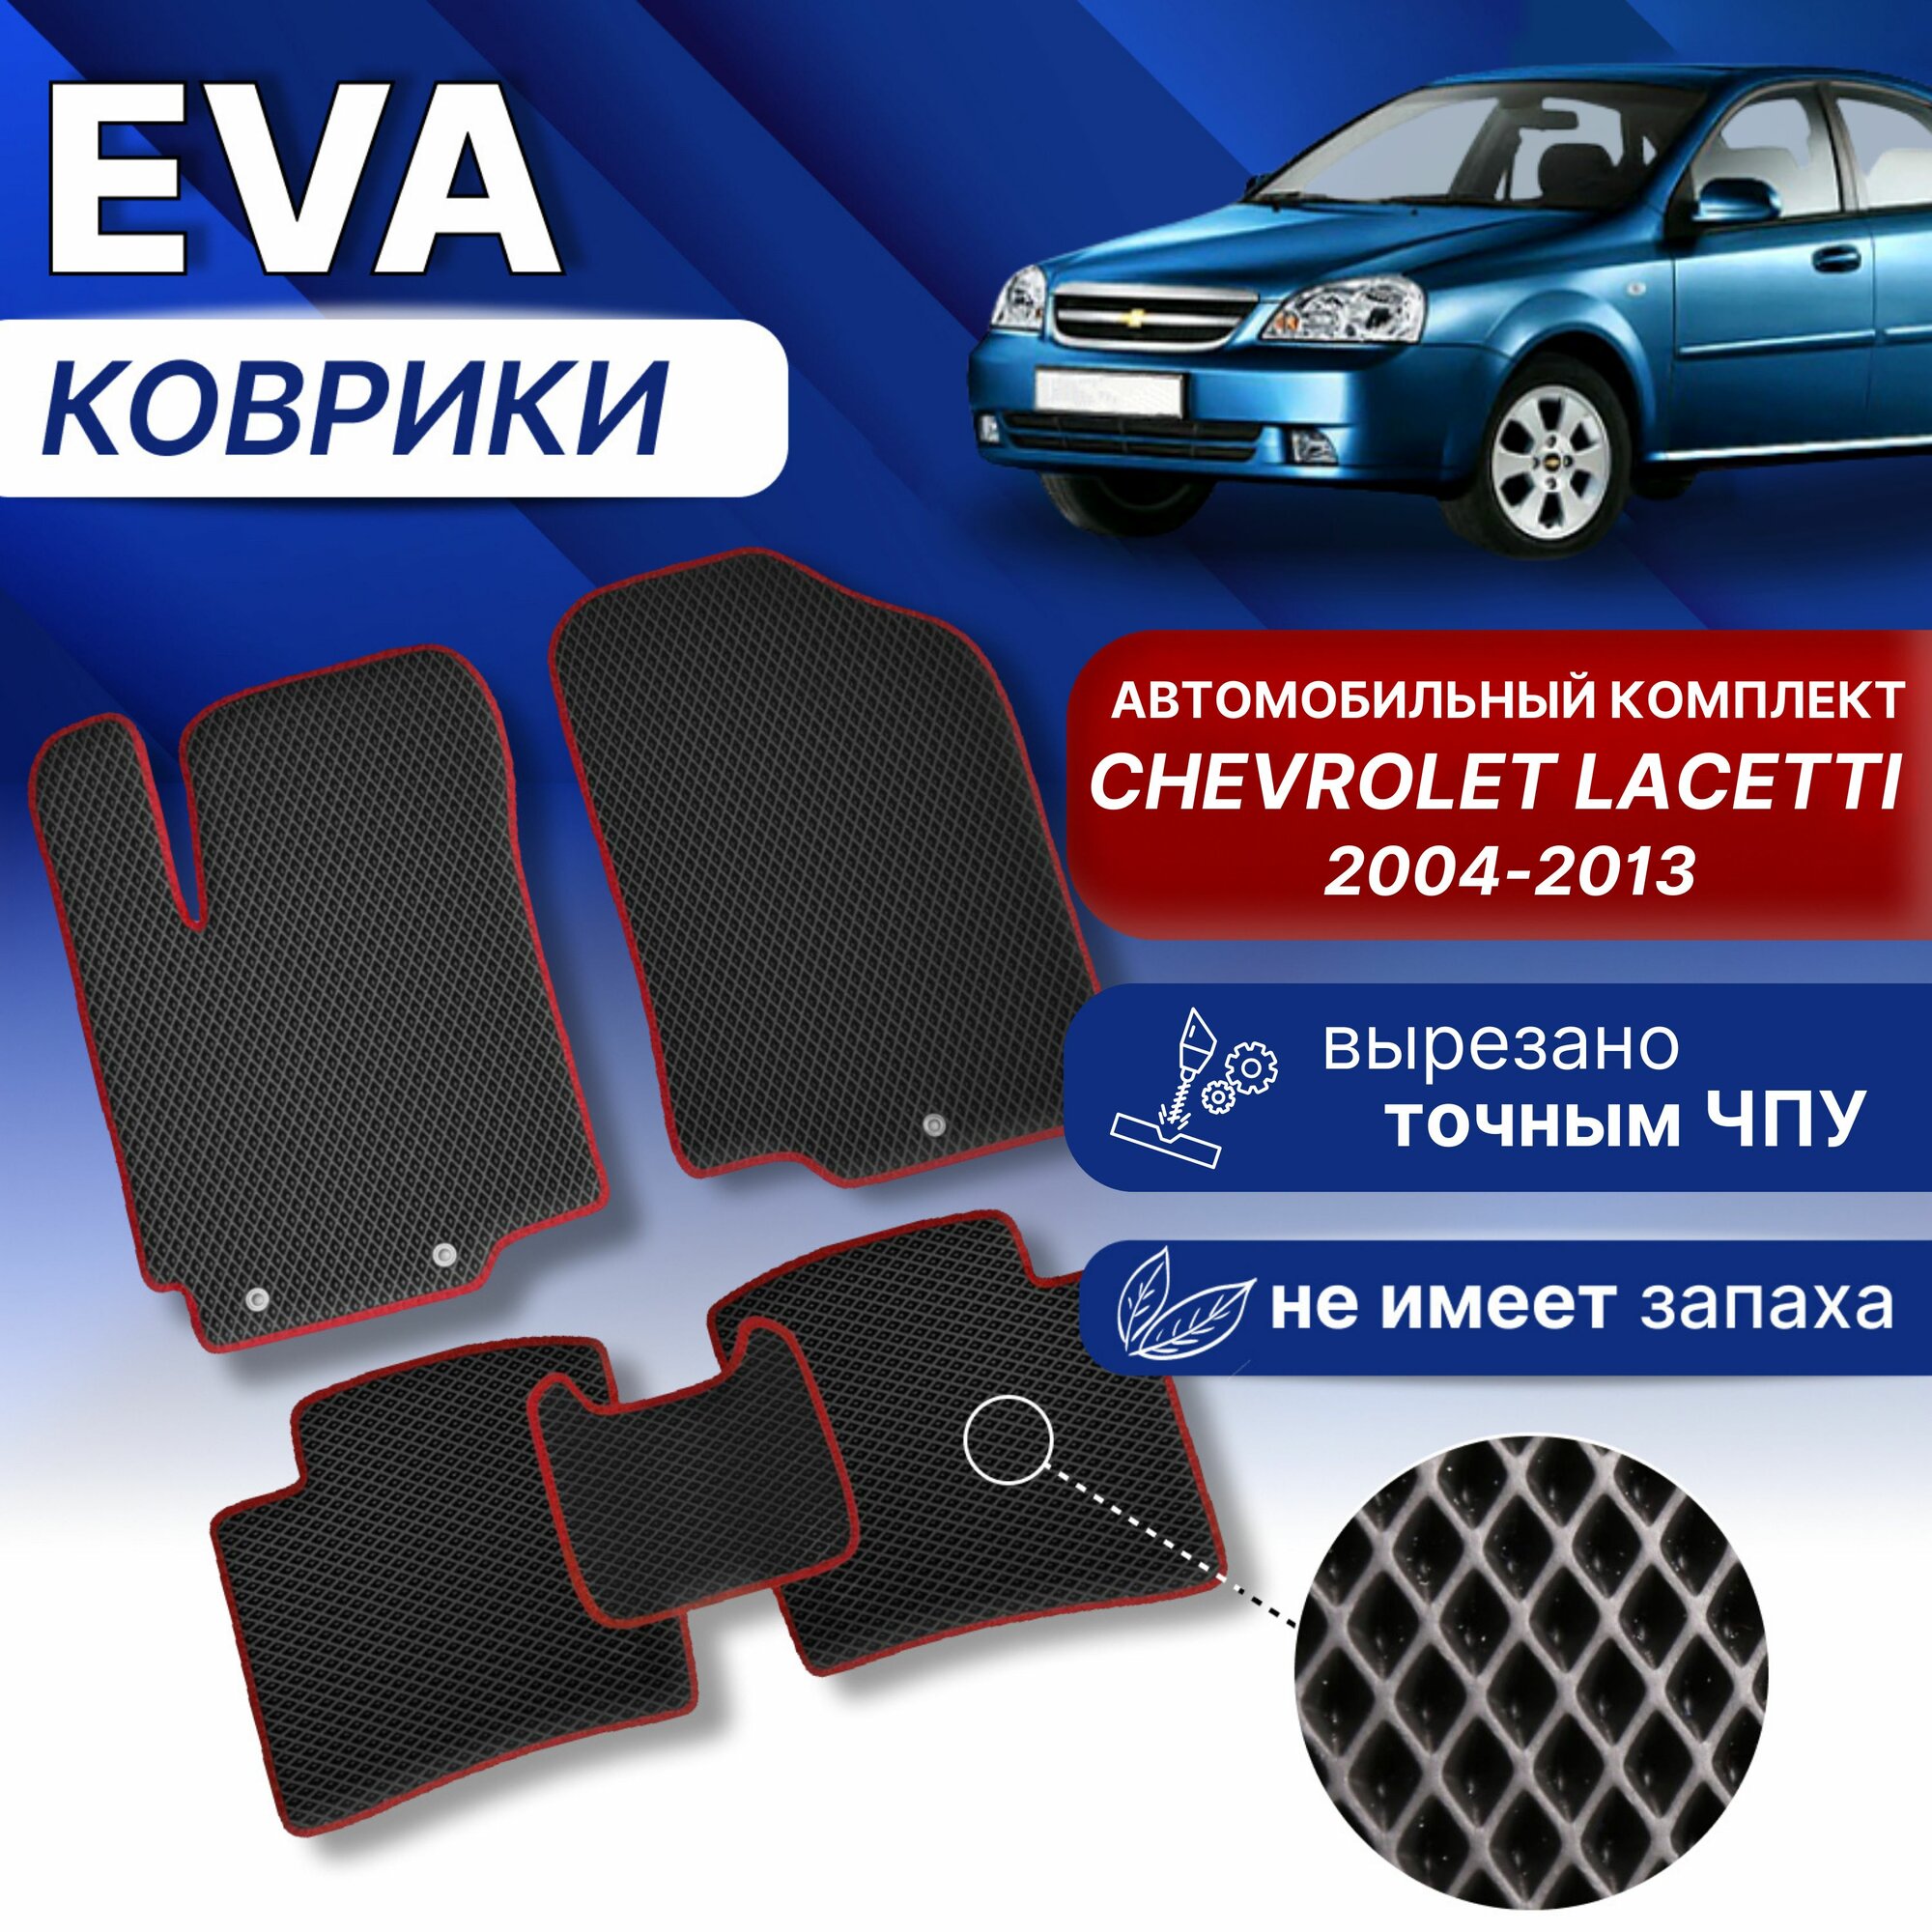 EVA Коврики в салон шевроле Лачетти (серый/серый кант) ЭВА Автокомплект в машину Chevrolet LACETTI 2004-2013г.